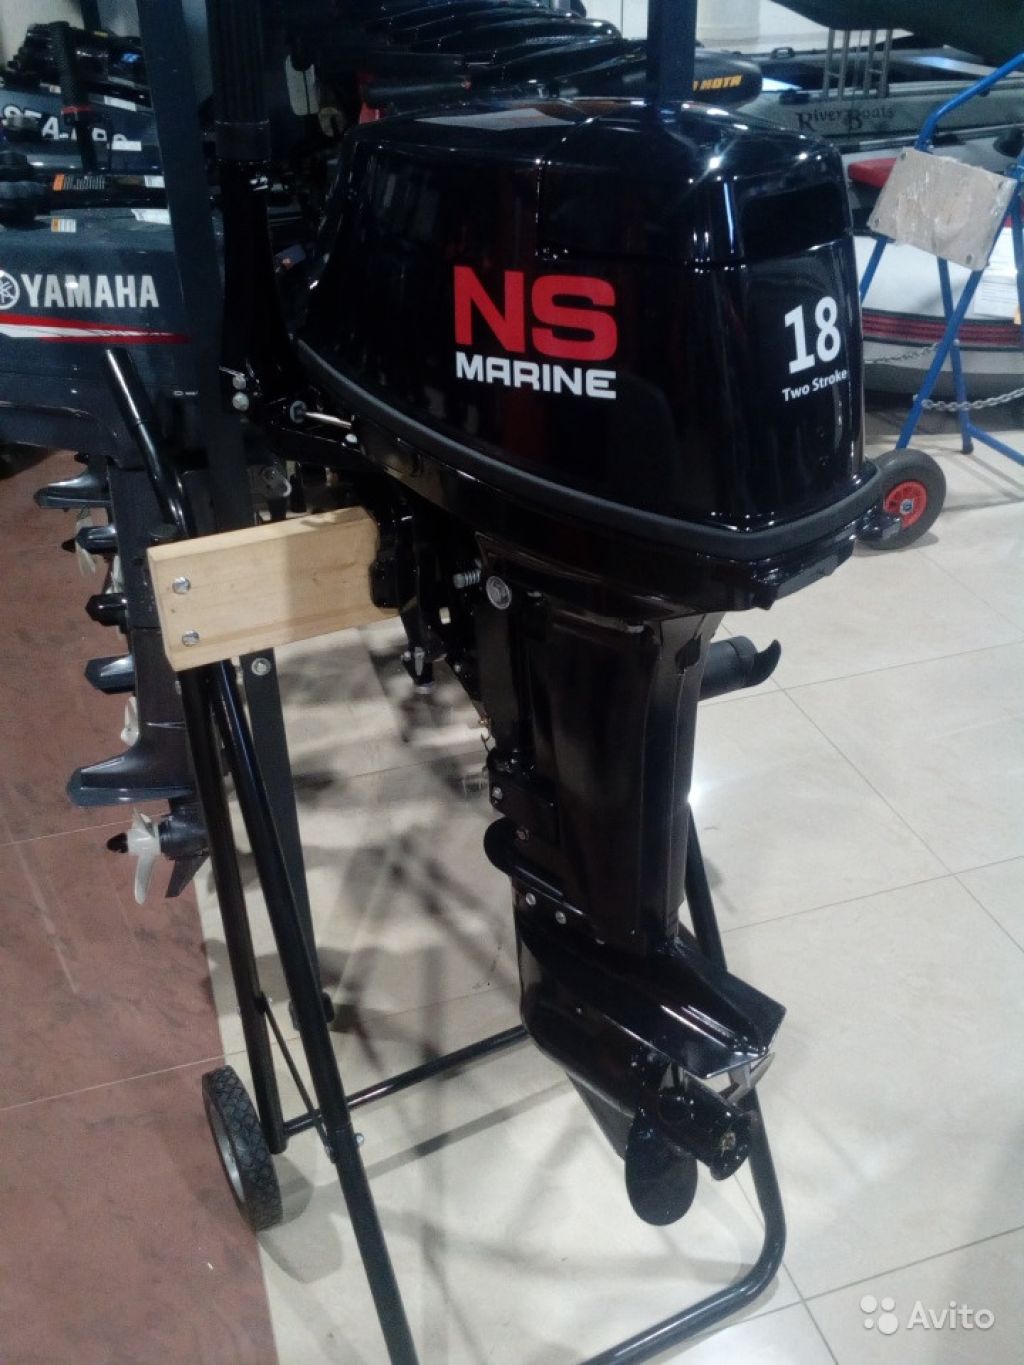 Мотор ниссан 9.8. Nissan Marine NS 18 e2. Лодочный мотор Nissan Marine 9.8. Лодочный мотор Ниссан Марине 9.9.